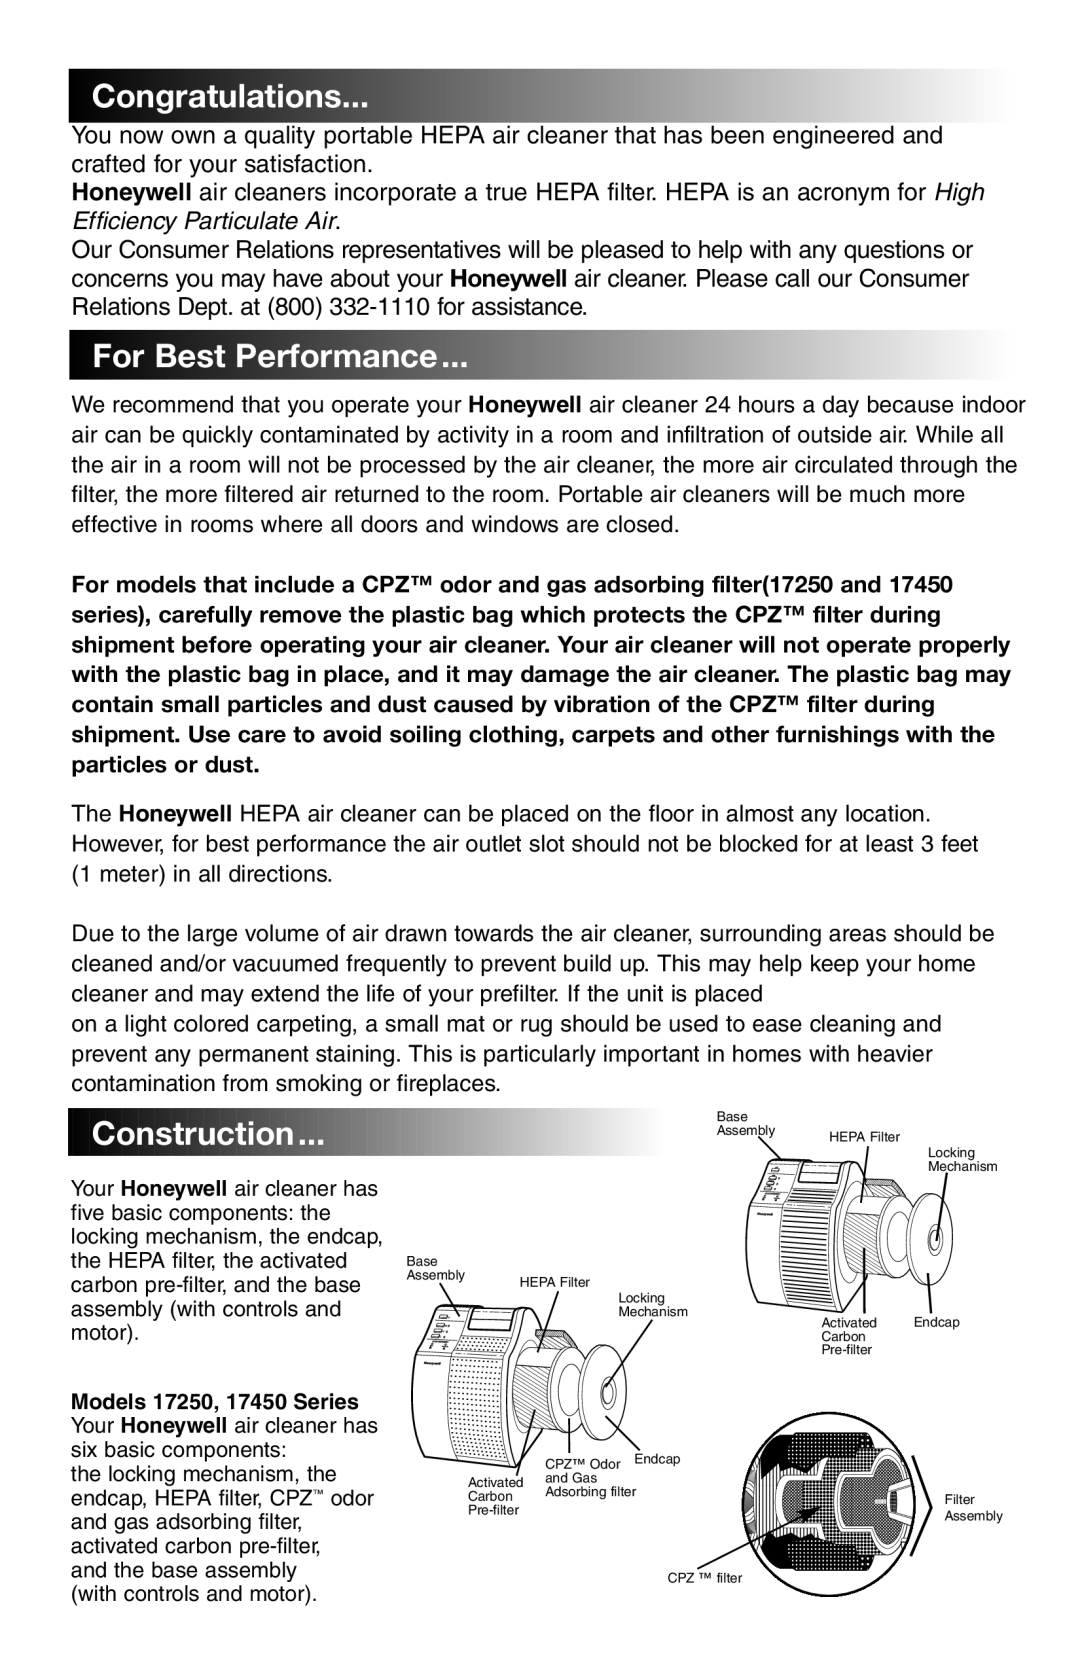 Honeywell 17000 manual Congratulations, ForBestPerformance, Construction 